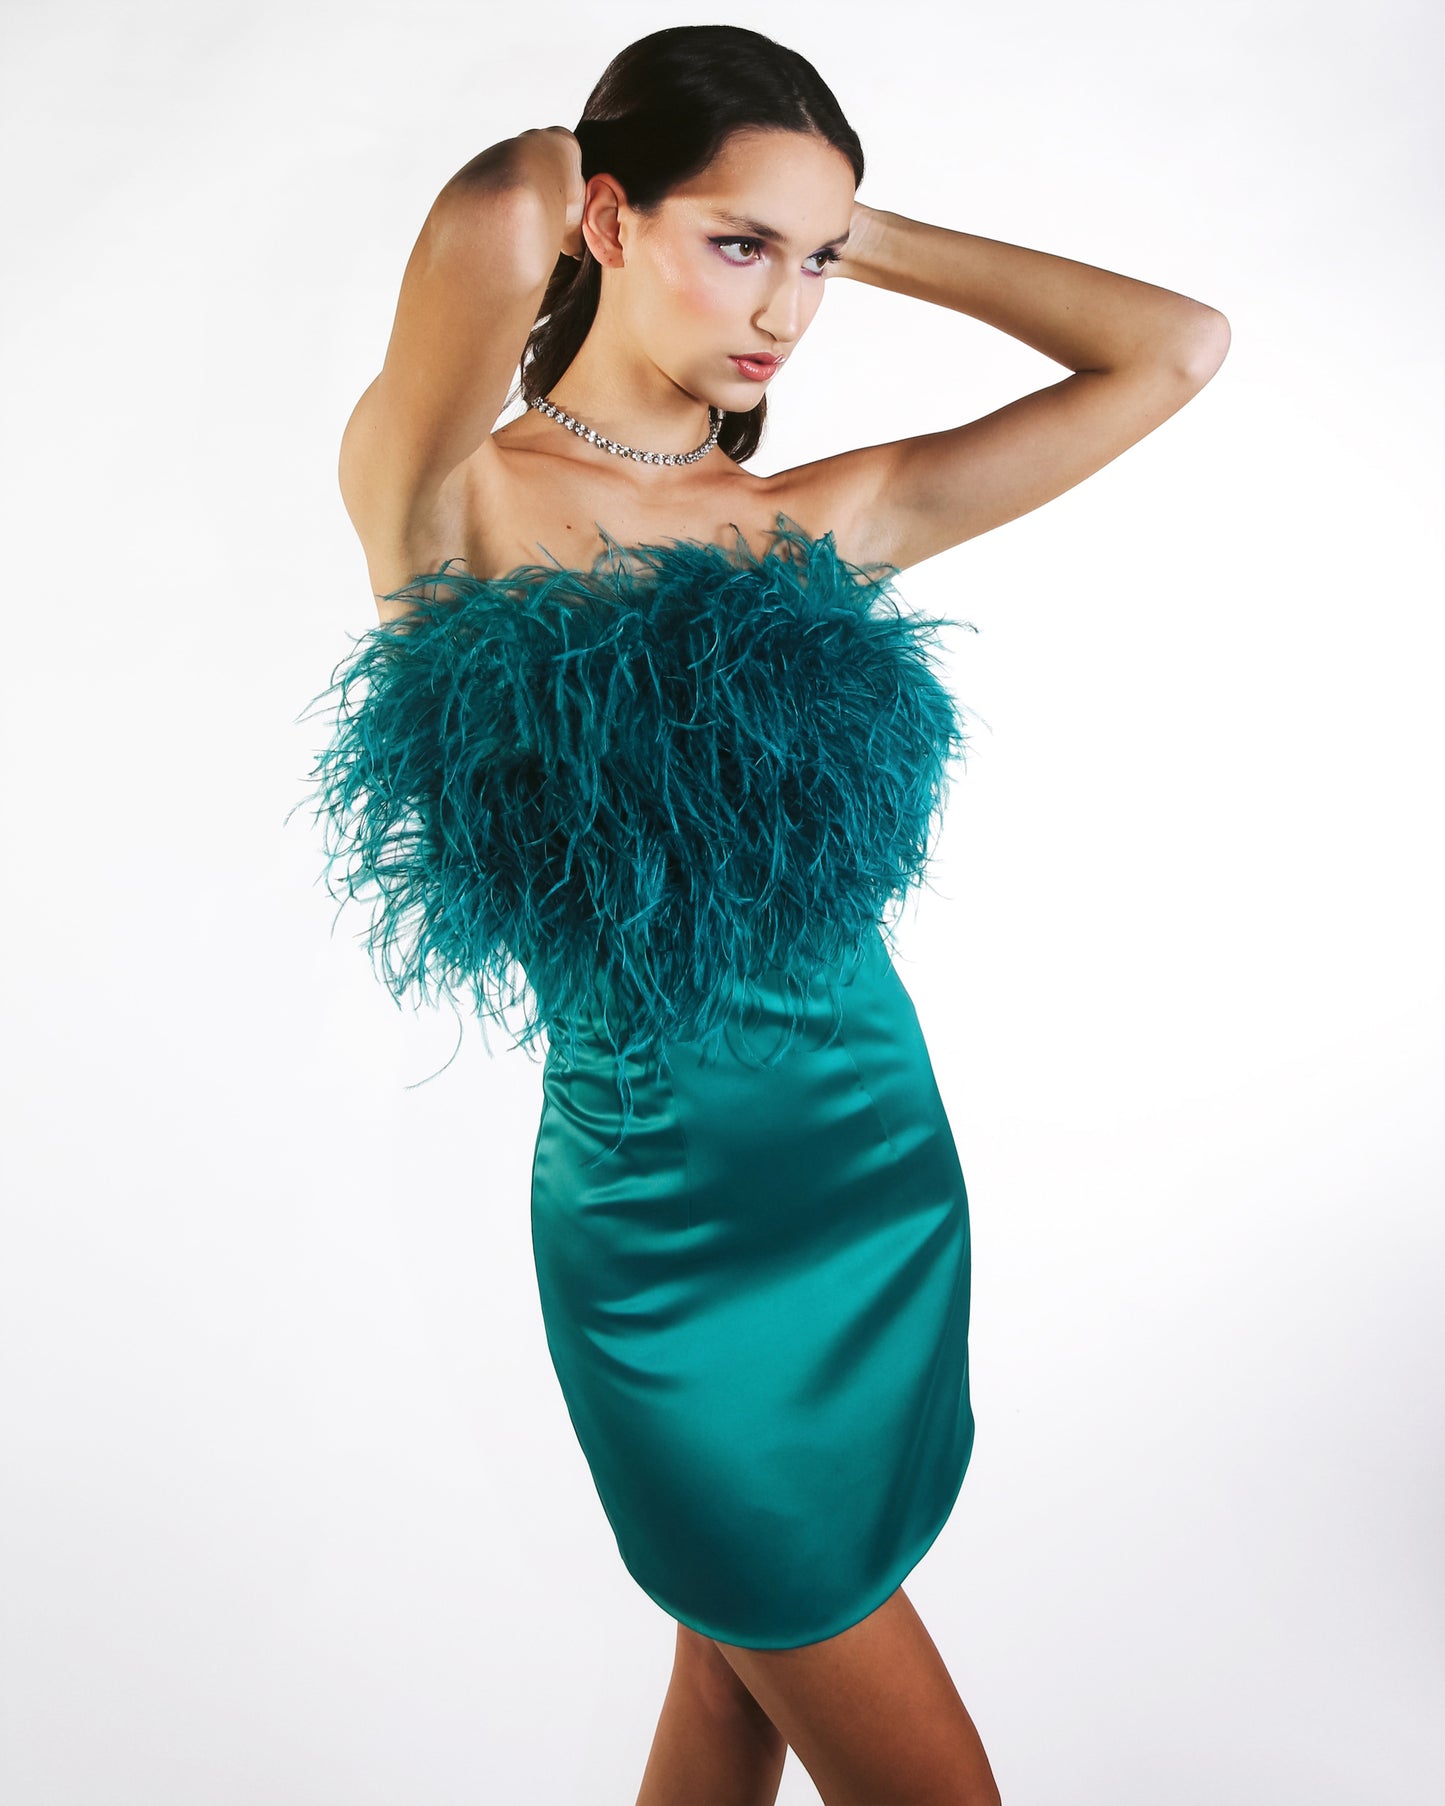 IRA by Irini Charalampous, @irathebrand online shop fashionable ready-to-wear womenswear brand dress NAOMI colour jade green high heels Cyprus Greece